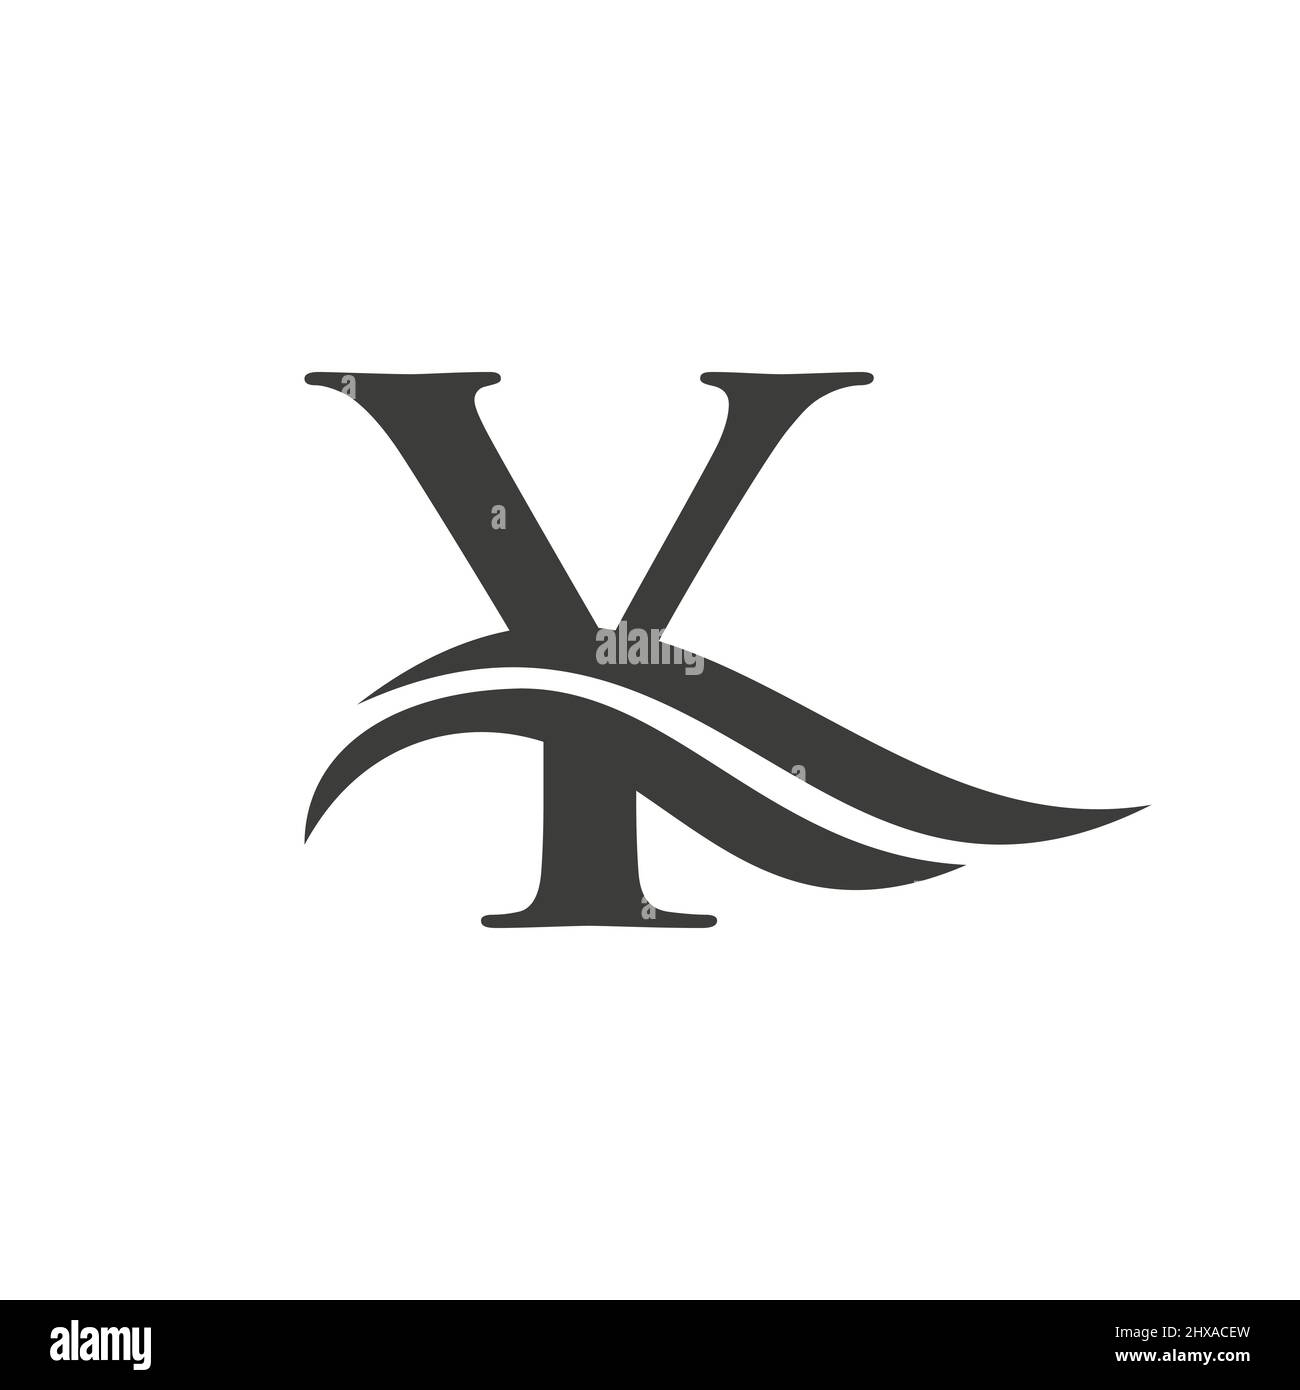 Letter Y Logo Design Stock Illustrations, Royalty-Free Vector